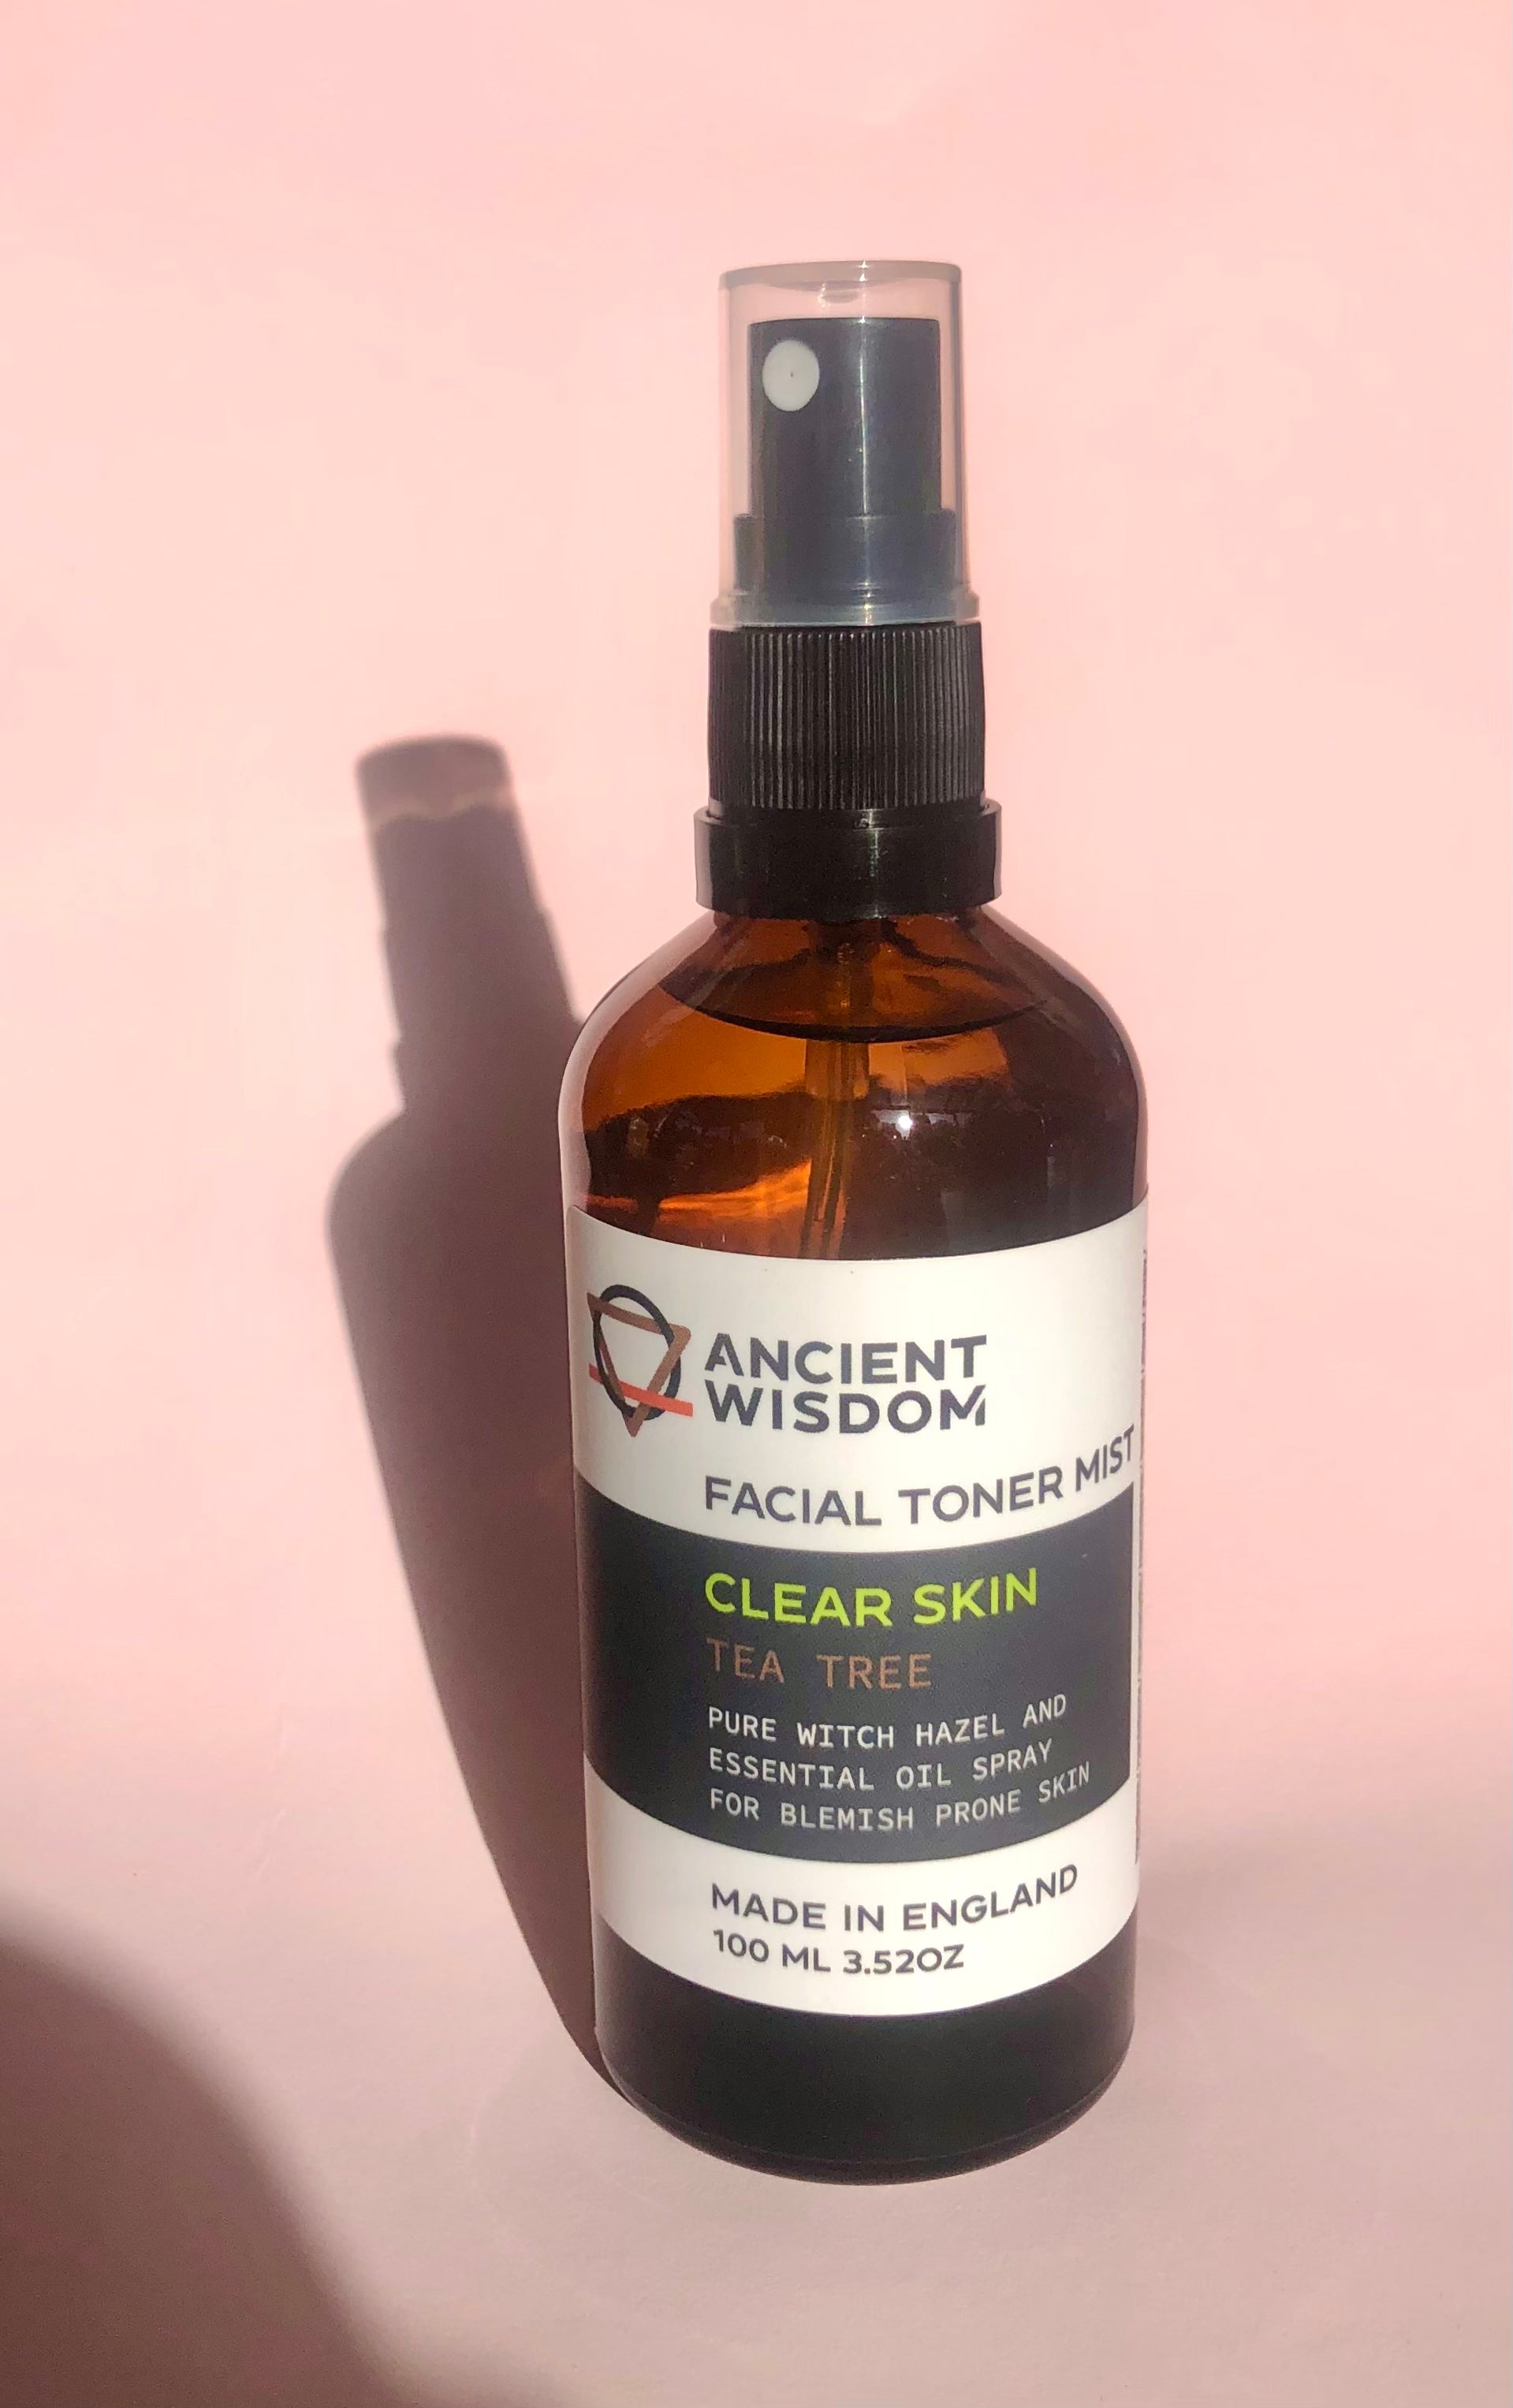 Facial Toner Mist ☽ Clear Skin Tea Tree ☽ fra Ancient Wisdom ☽ 100 ml